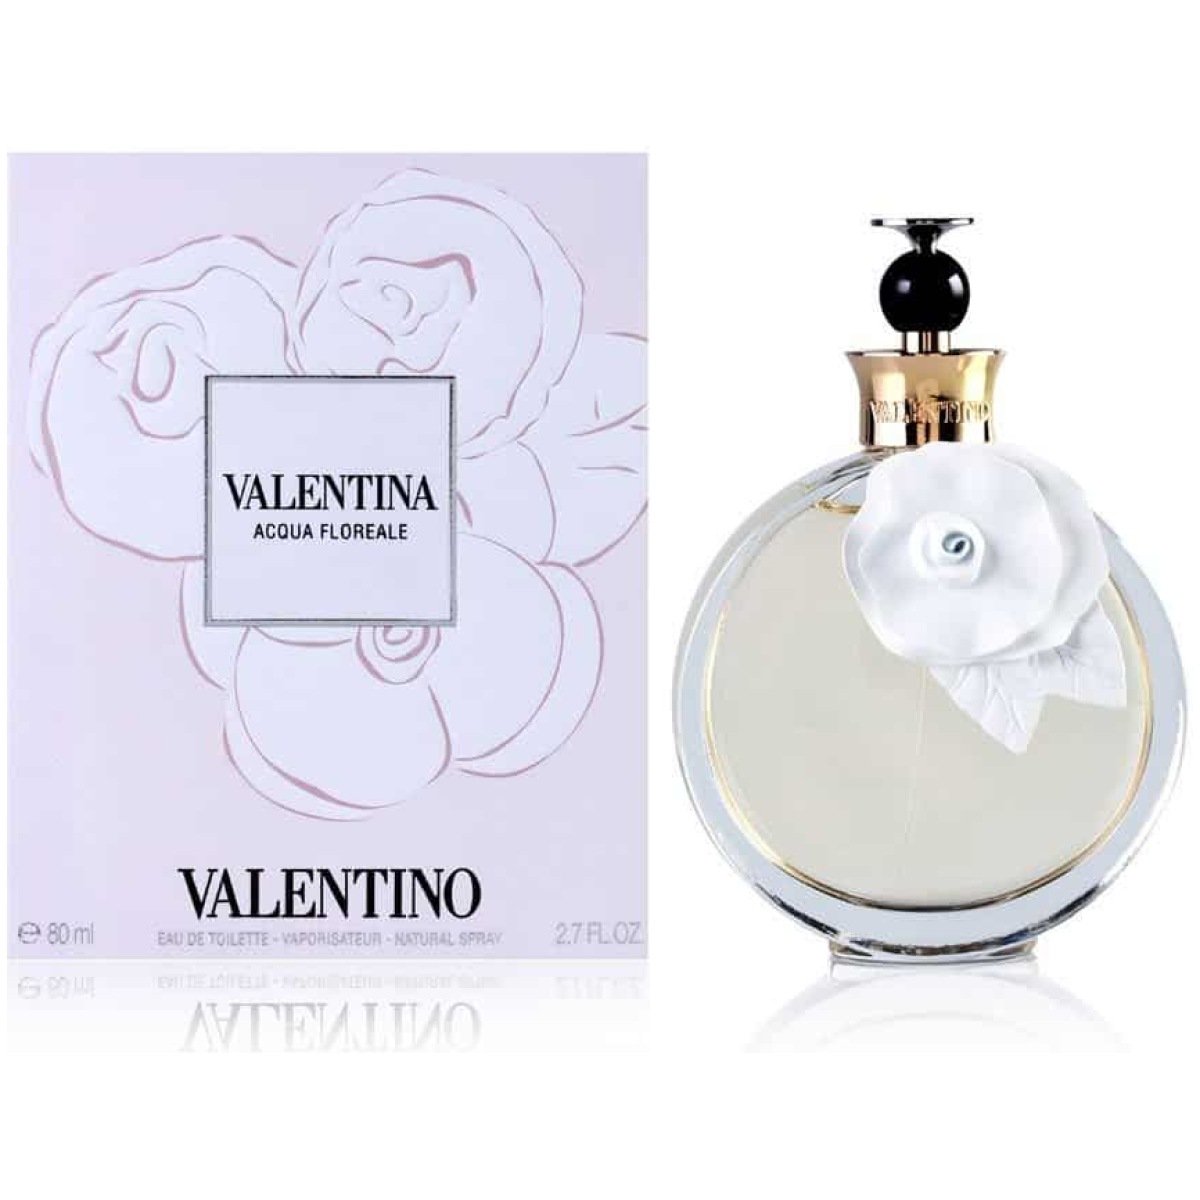 Valentino Valentina Acqua Floreale EDT Perfume For Women 80ml